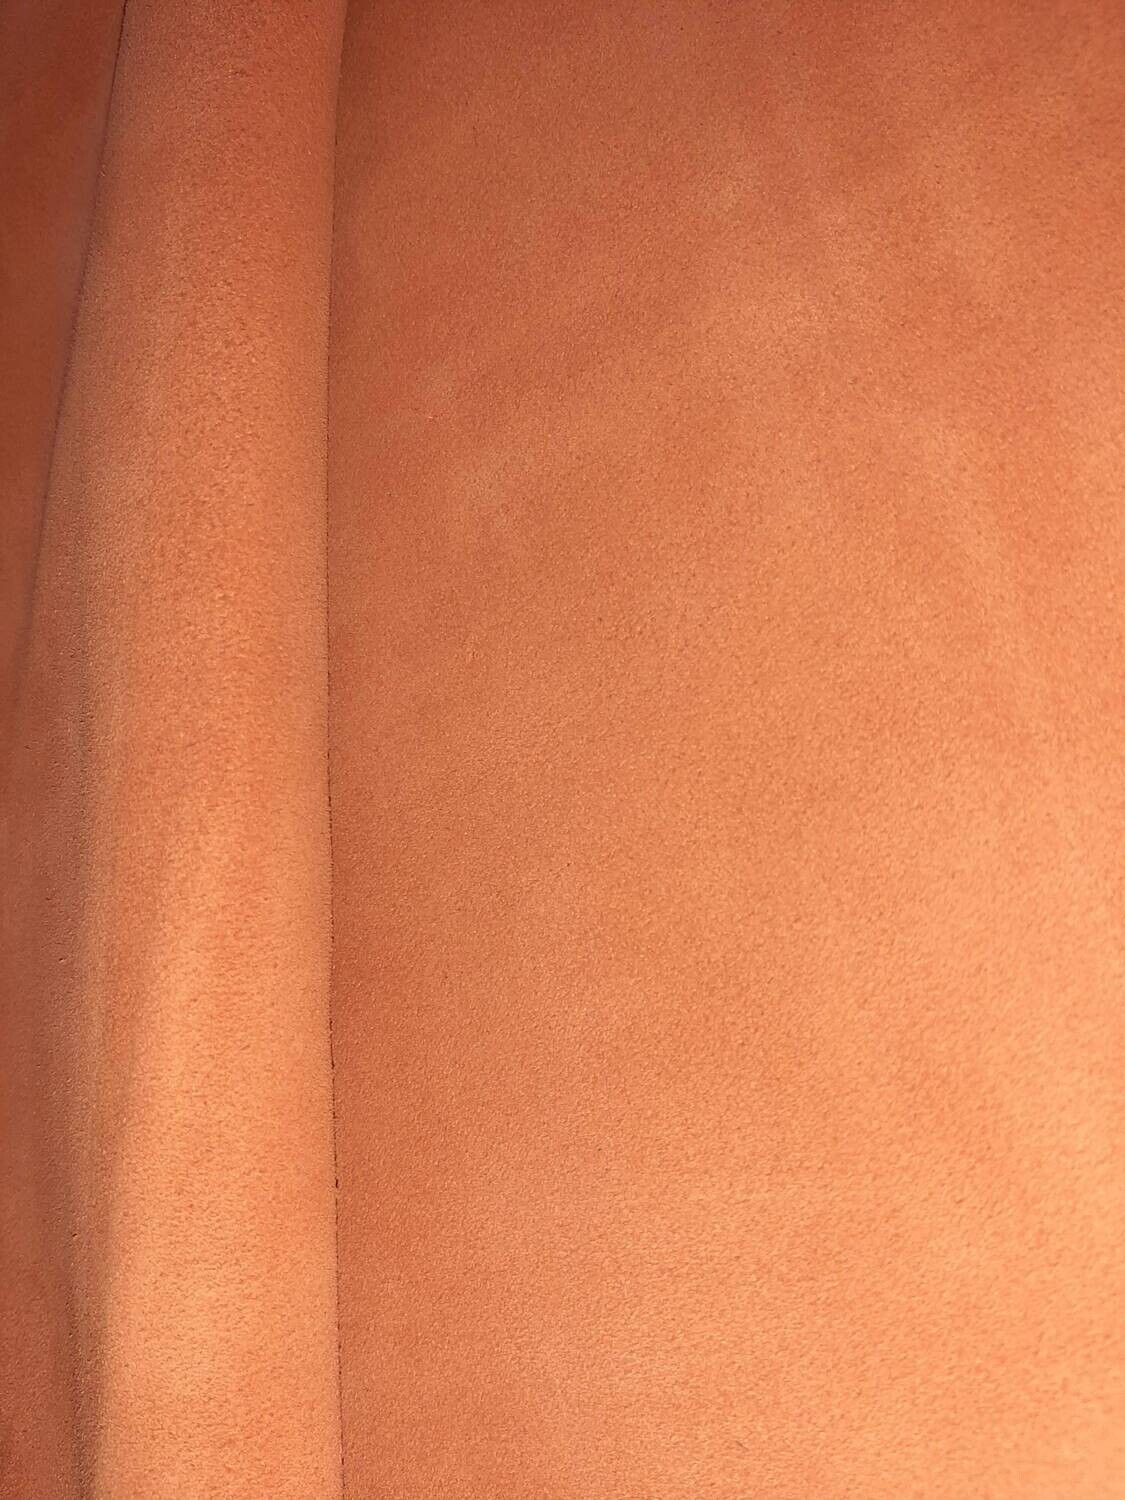 Leather suede orange